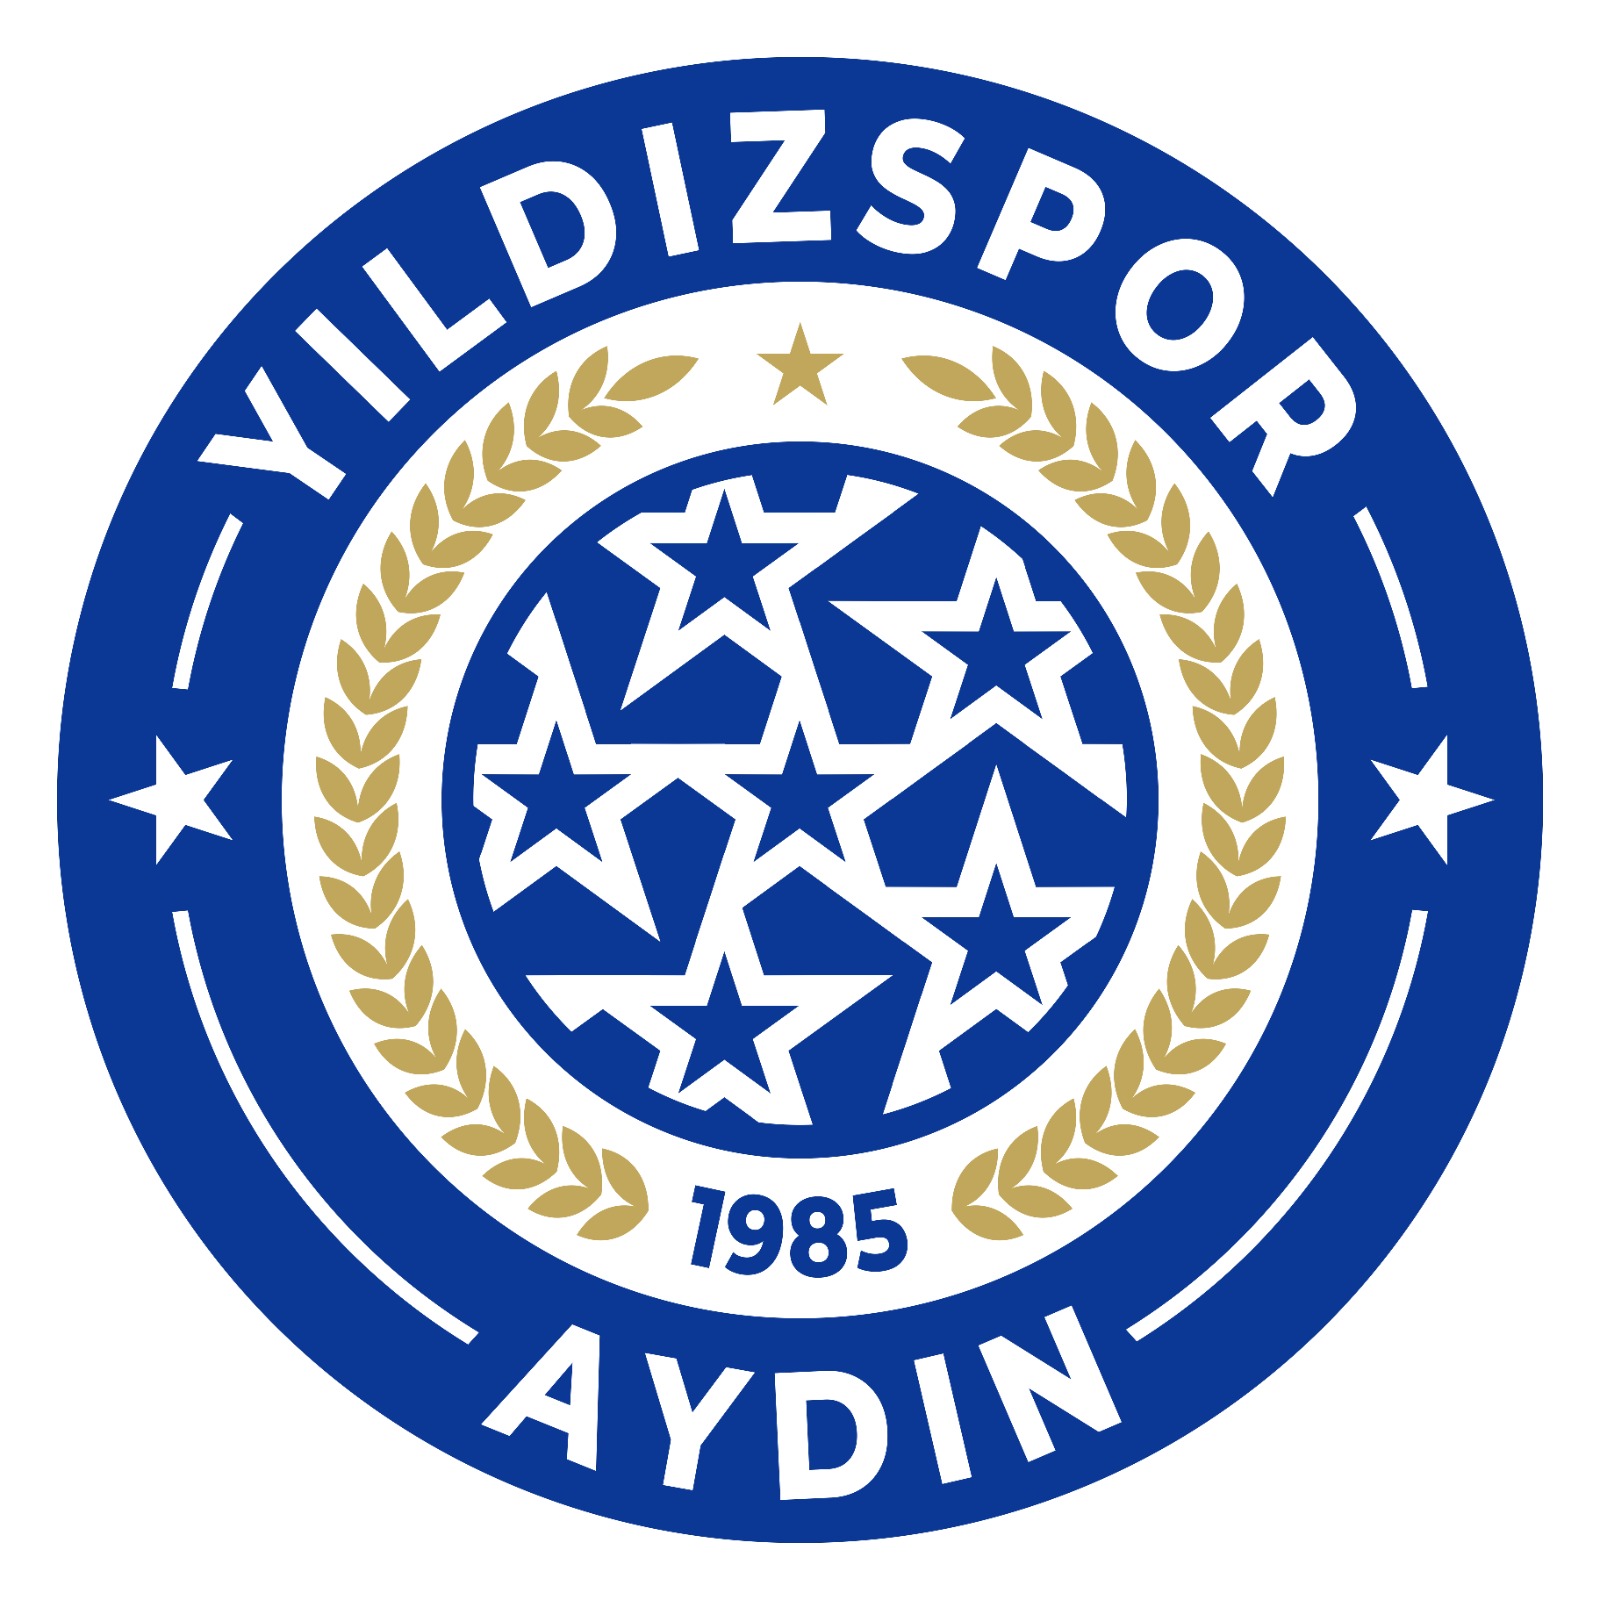 AYDIN YILDIZSPOR